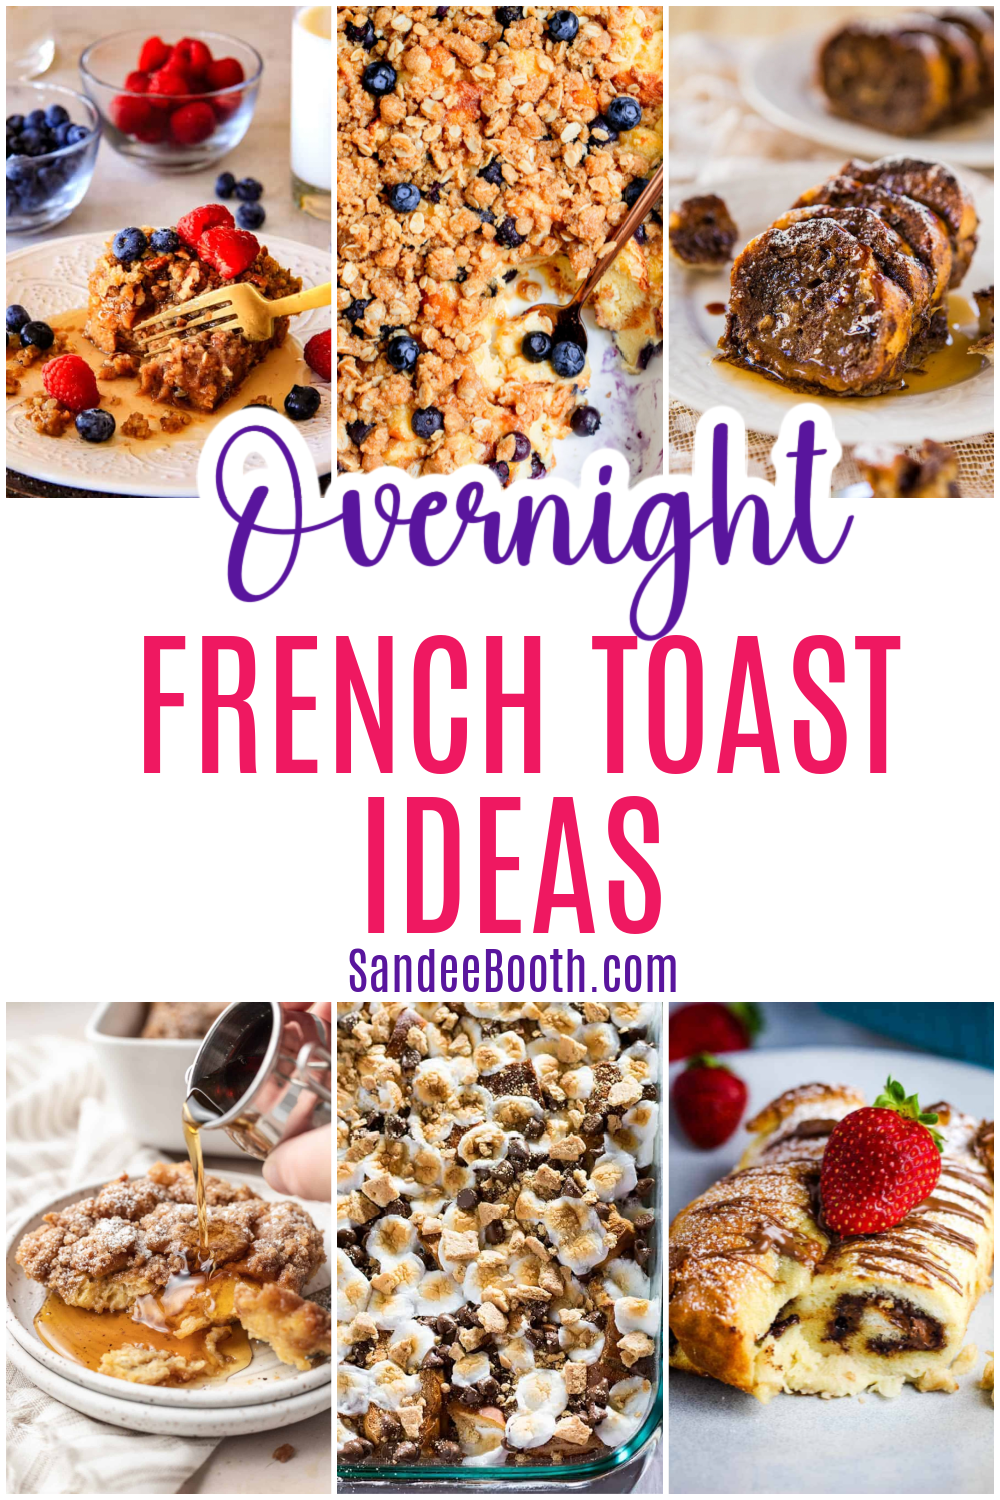 Overnight French Toast Ideas